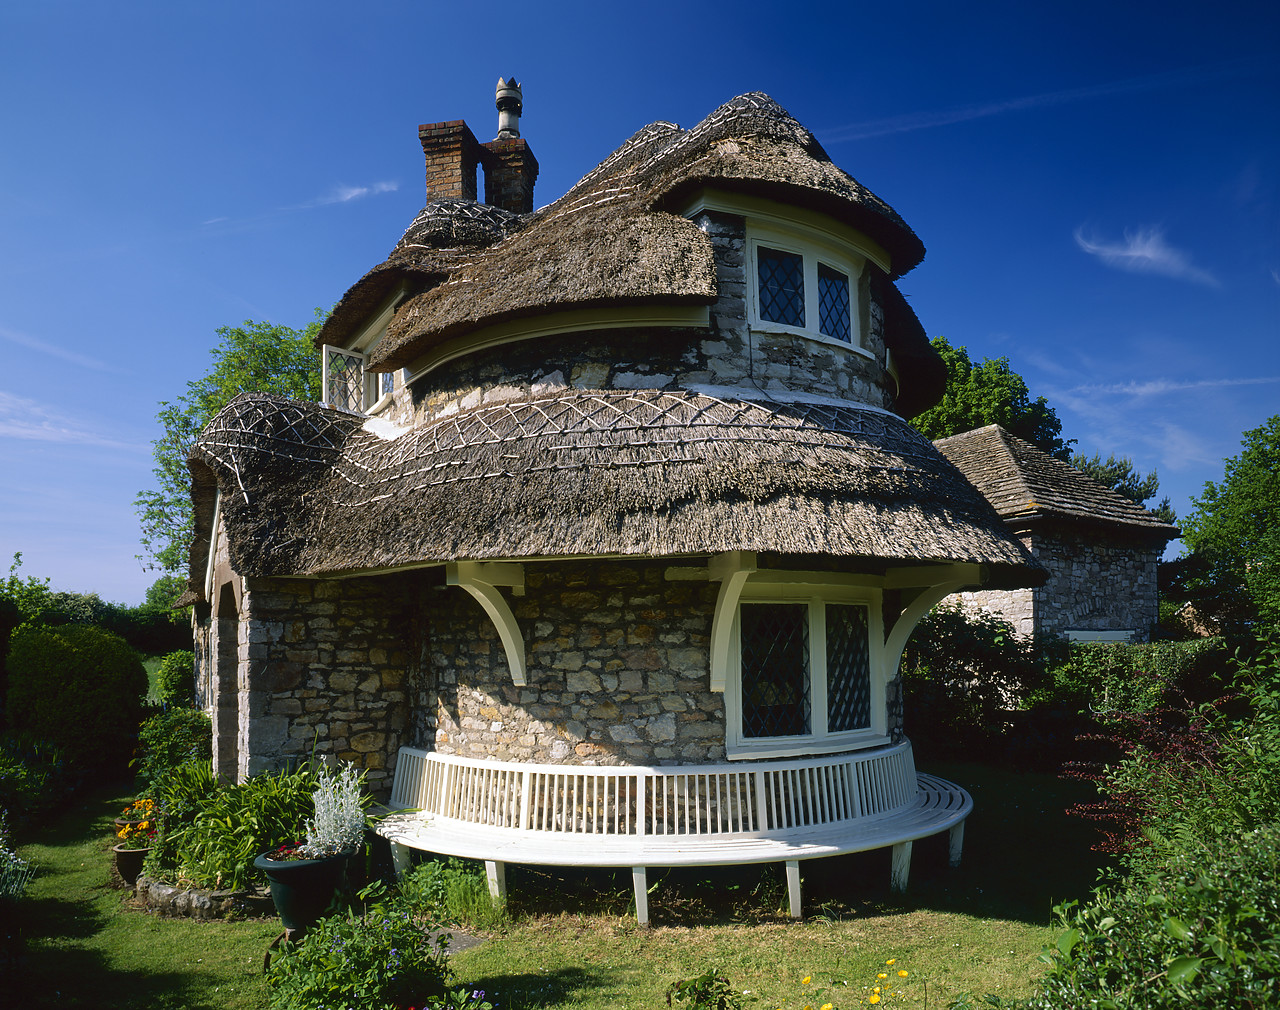 #010635-1 - Thatched Circular Cottage, Blaise Hamlet, Avon, England